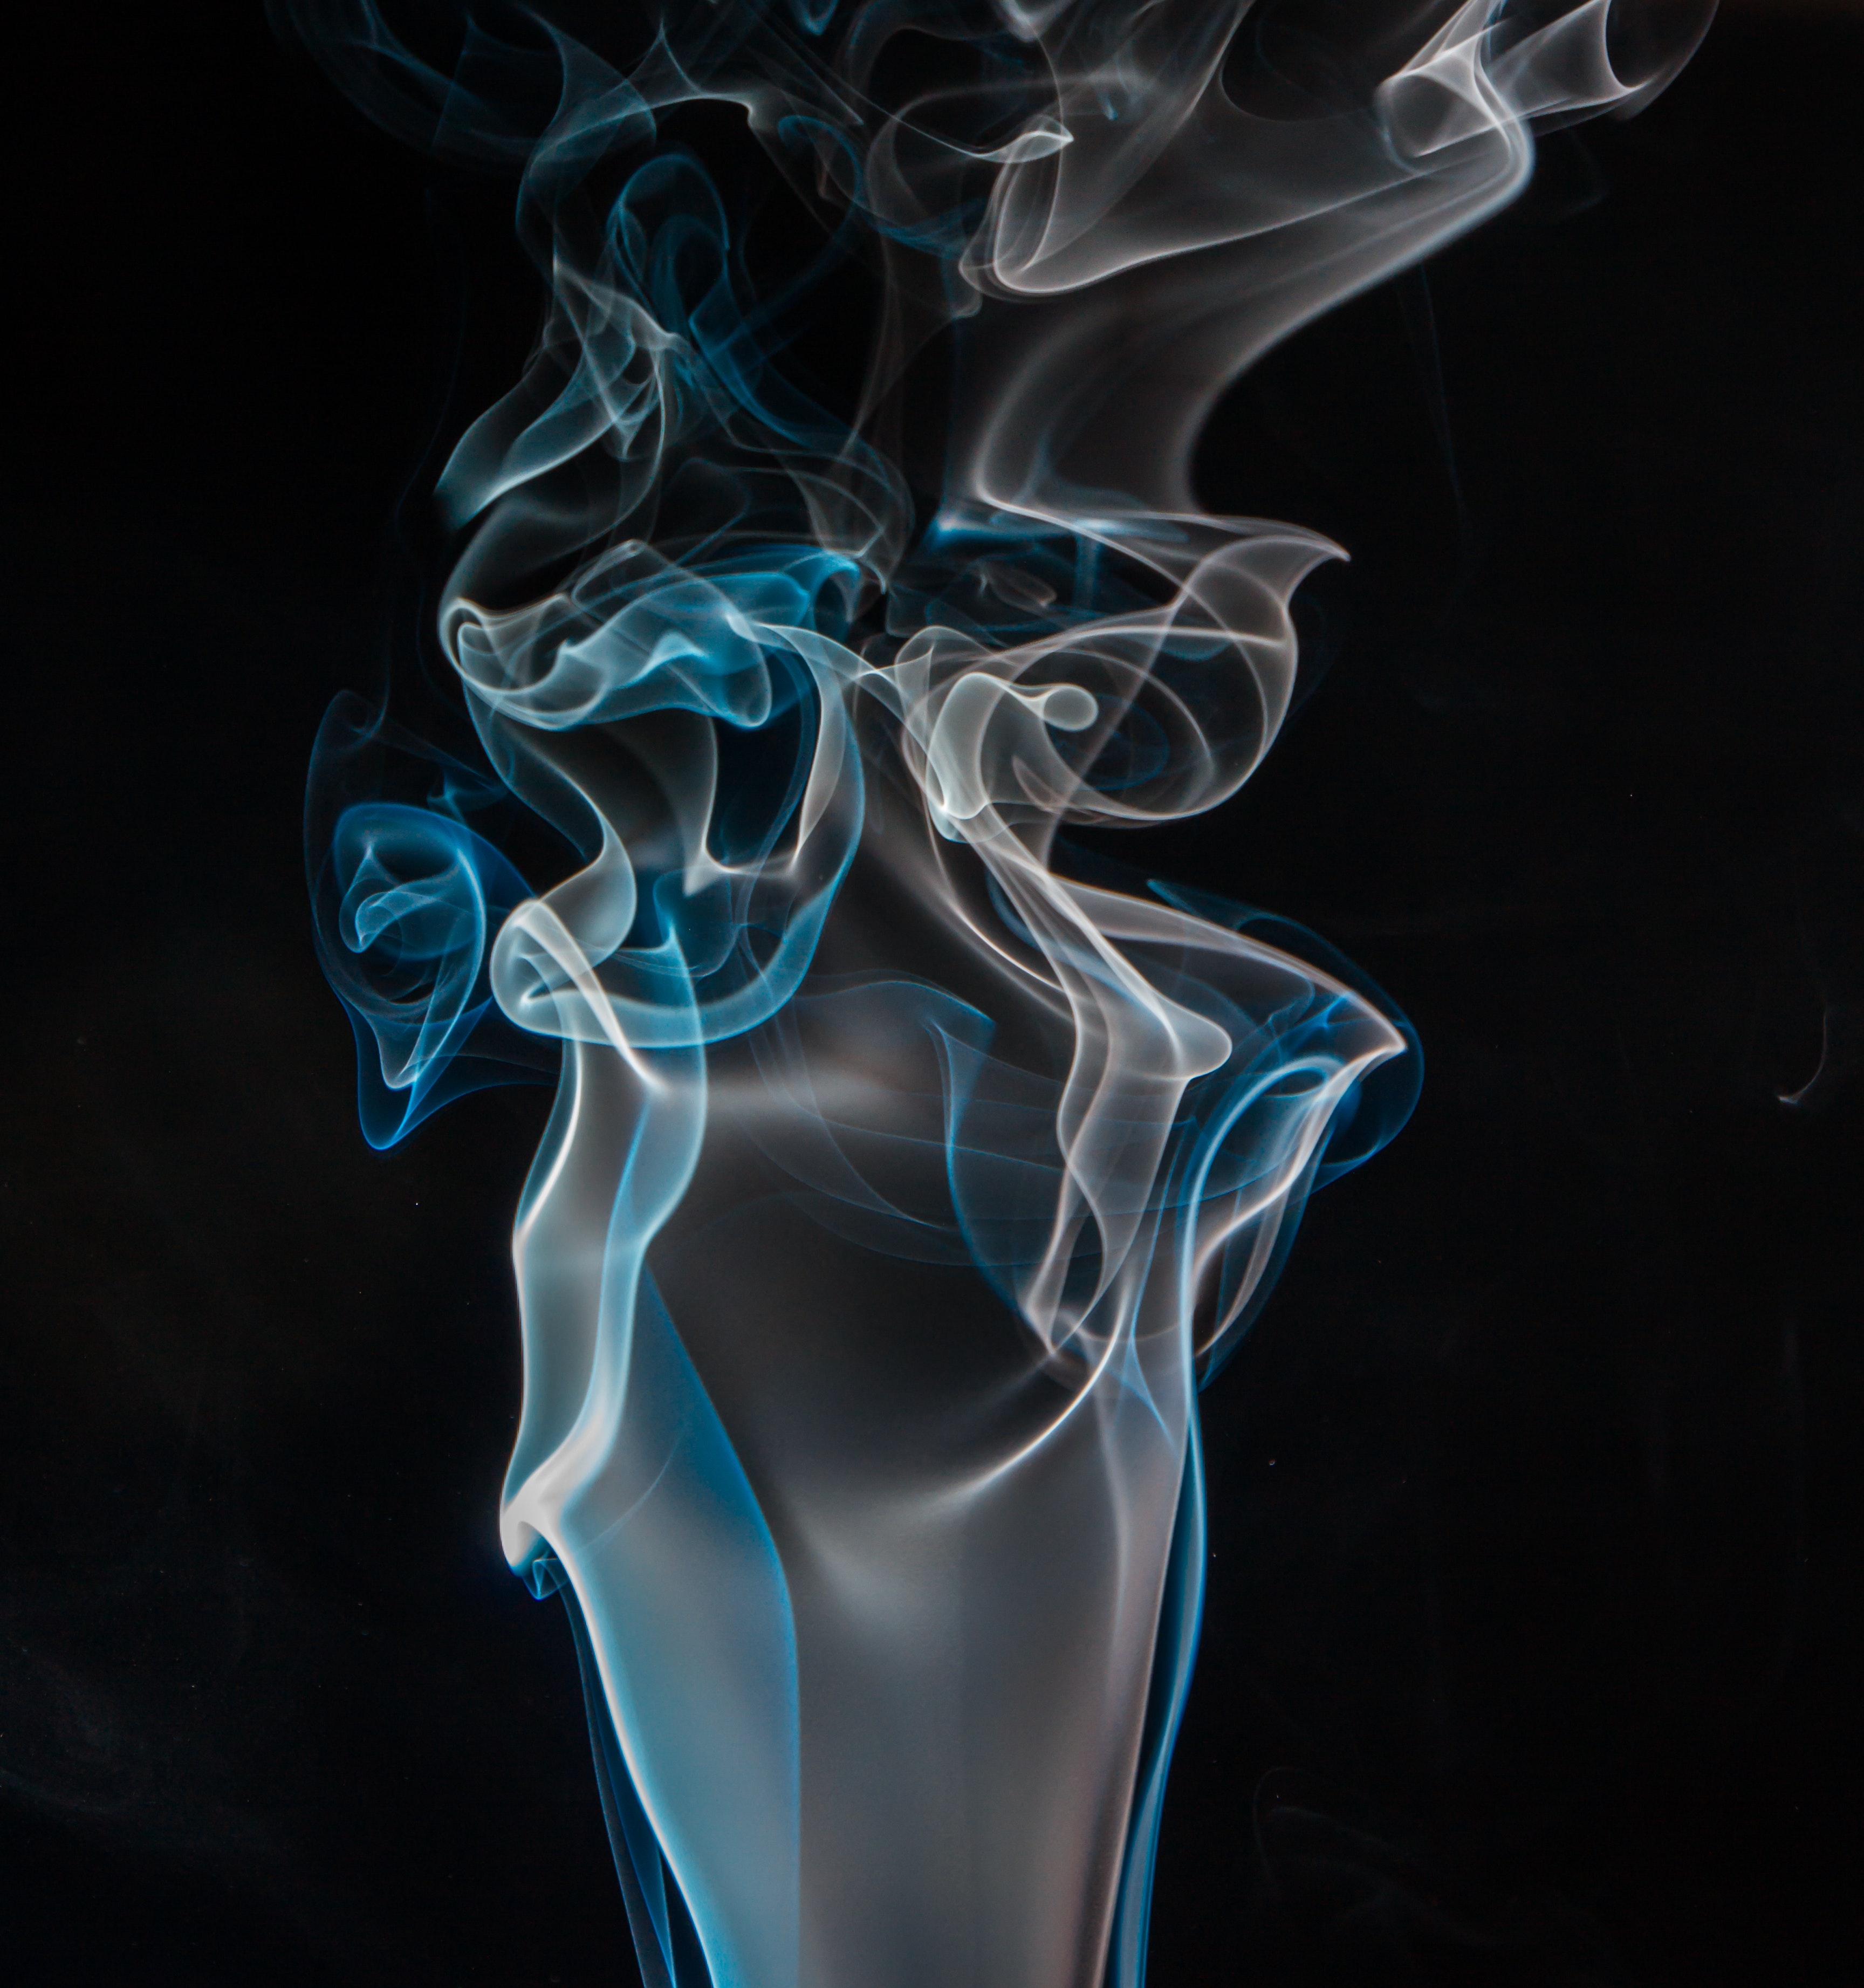 colored smoke, shroud, abstract, coloured smoke Cell Phone Image